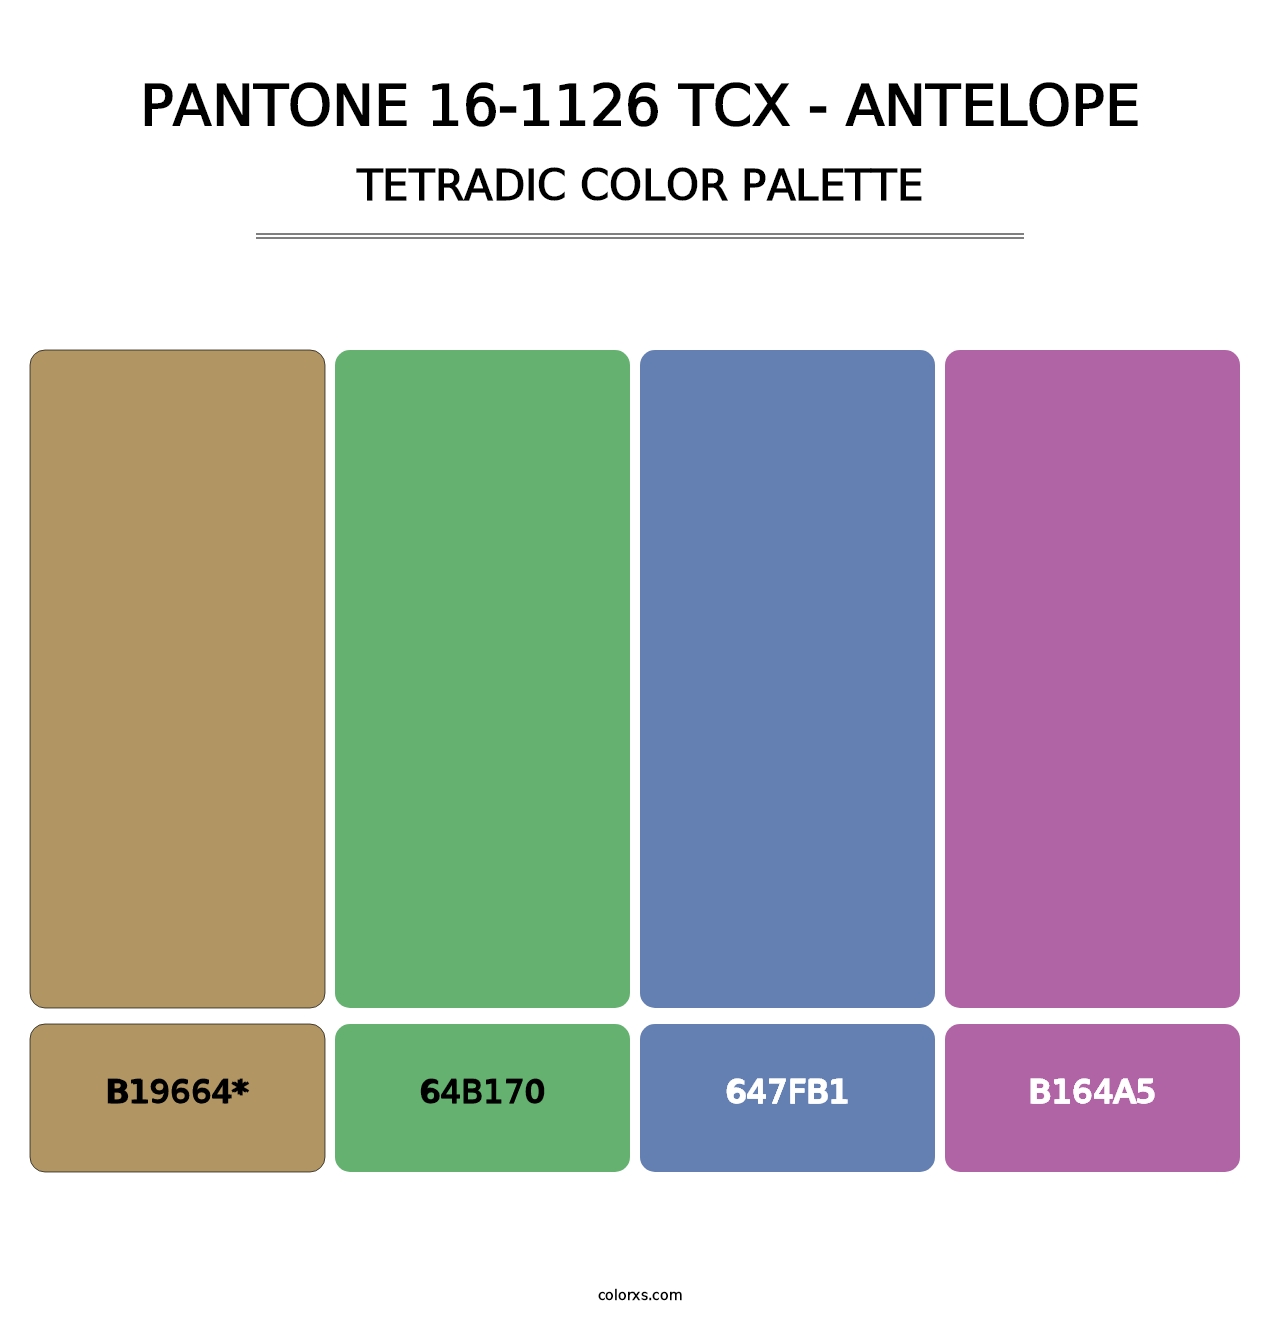 PANTONE 16-1126 TCX - Antelope - Tetradic Color Palette